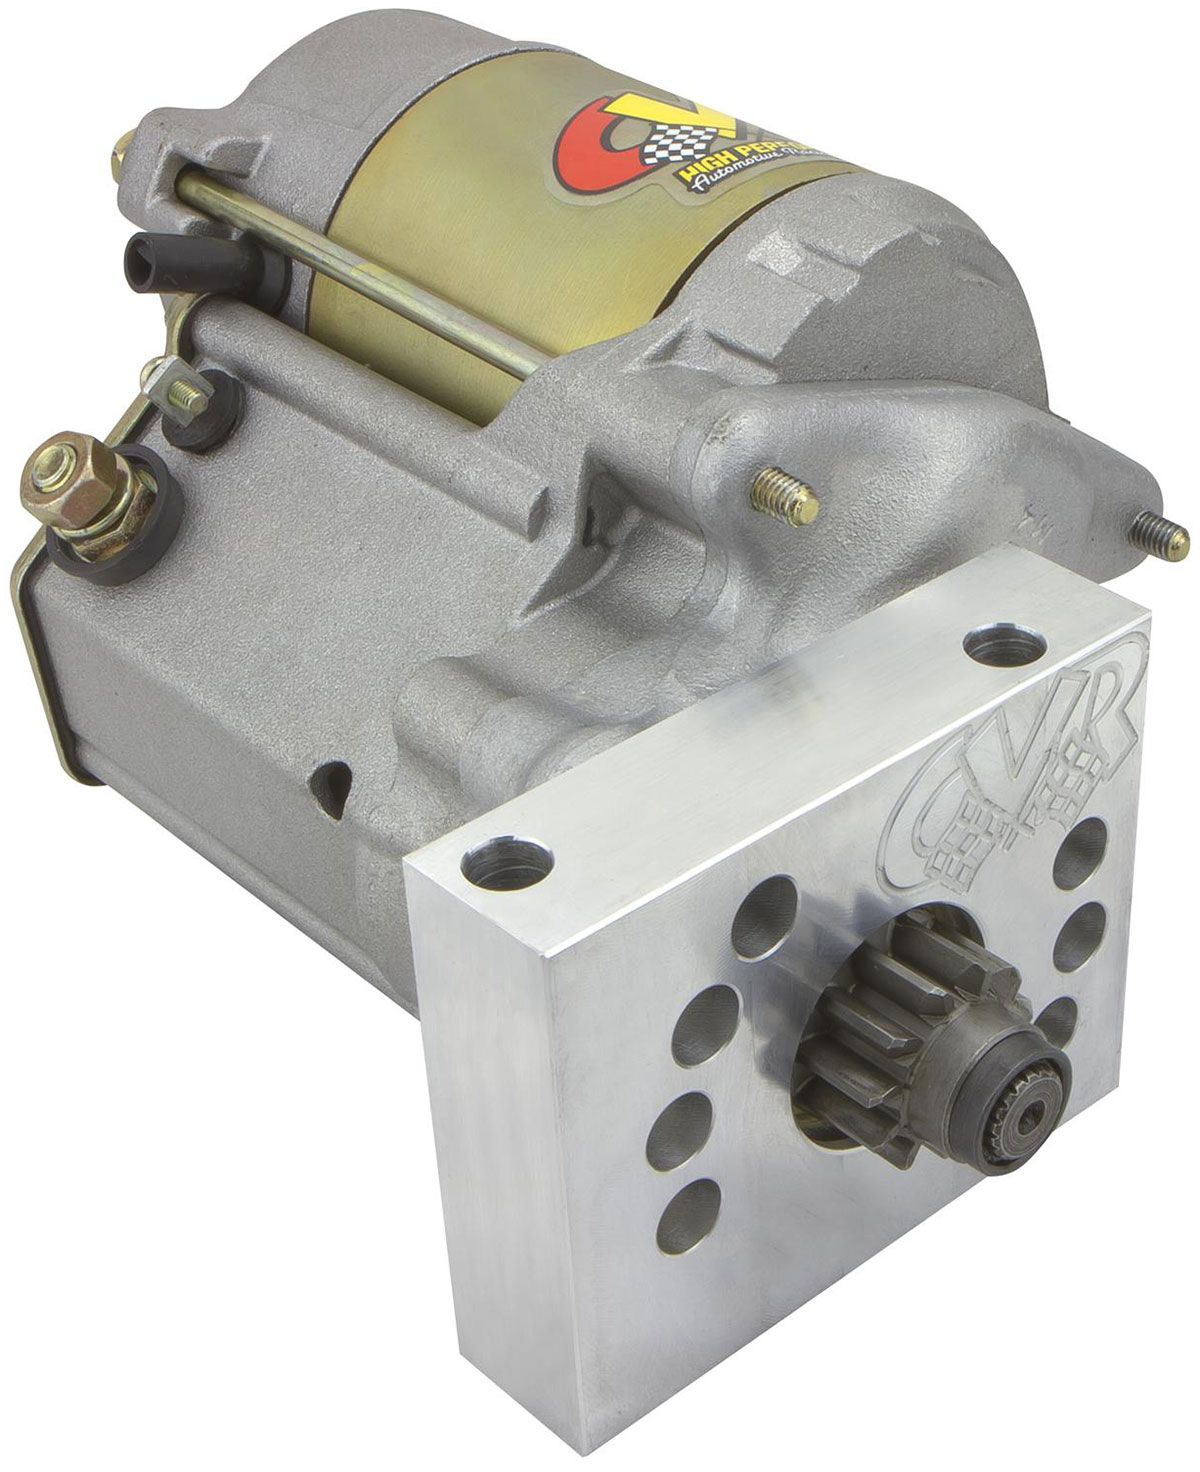 CVR5414 -  Protorque Starter Motor - 1.9 HP Holden/GM LS Series Engines, 5 adjustable positions